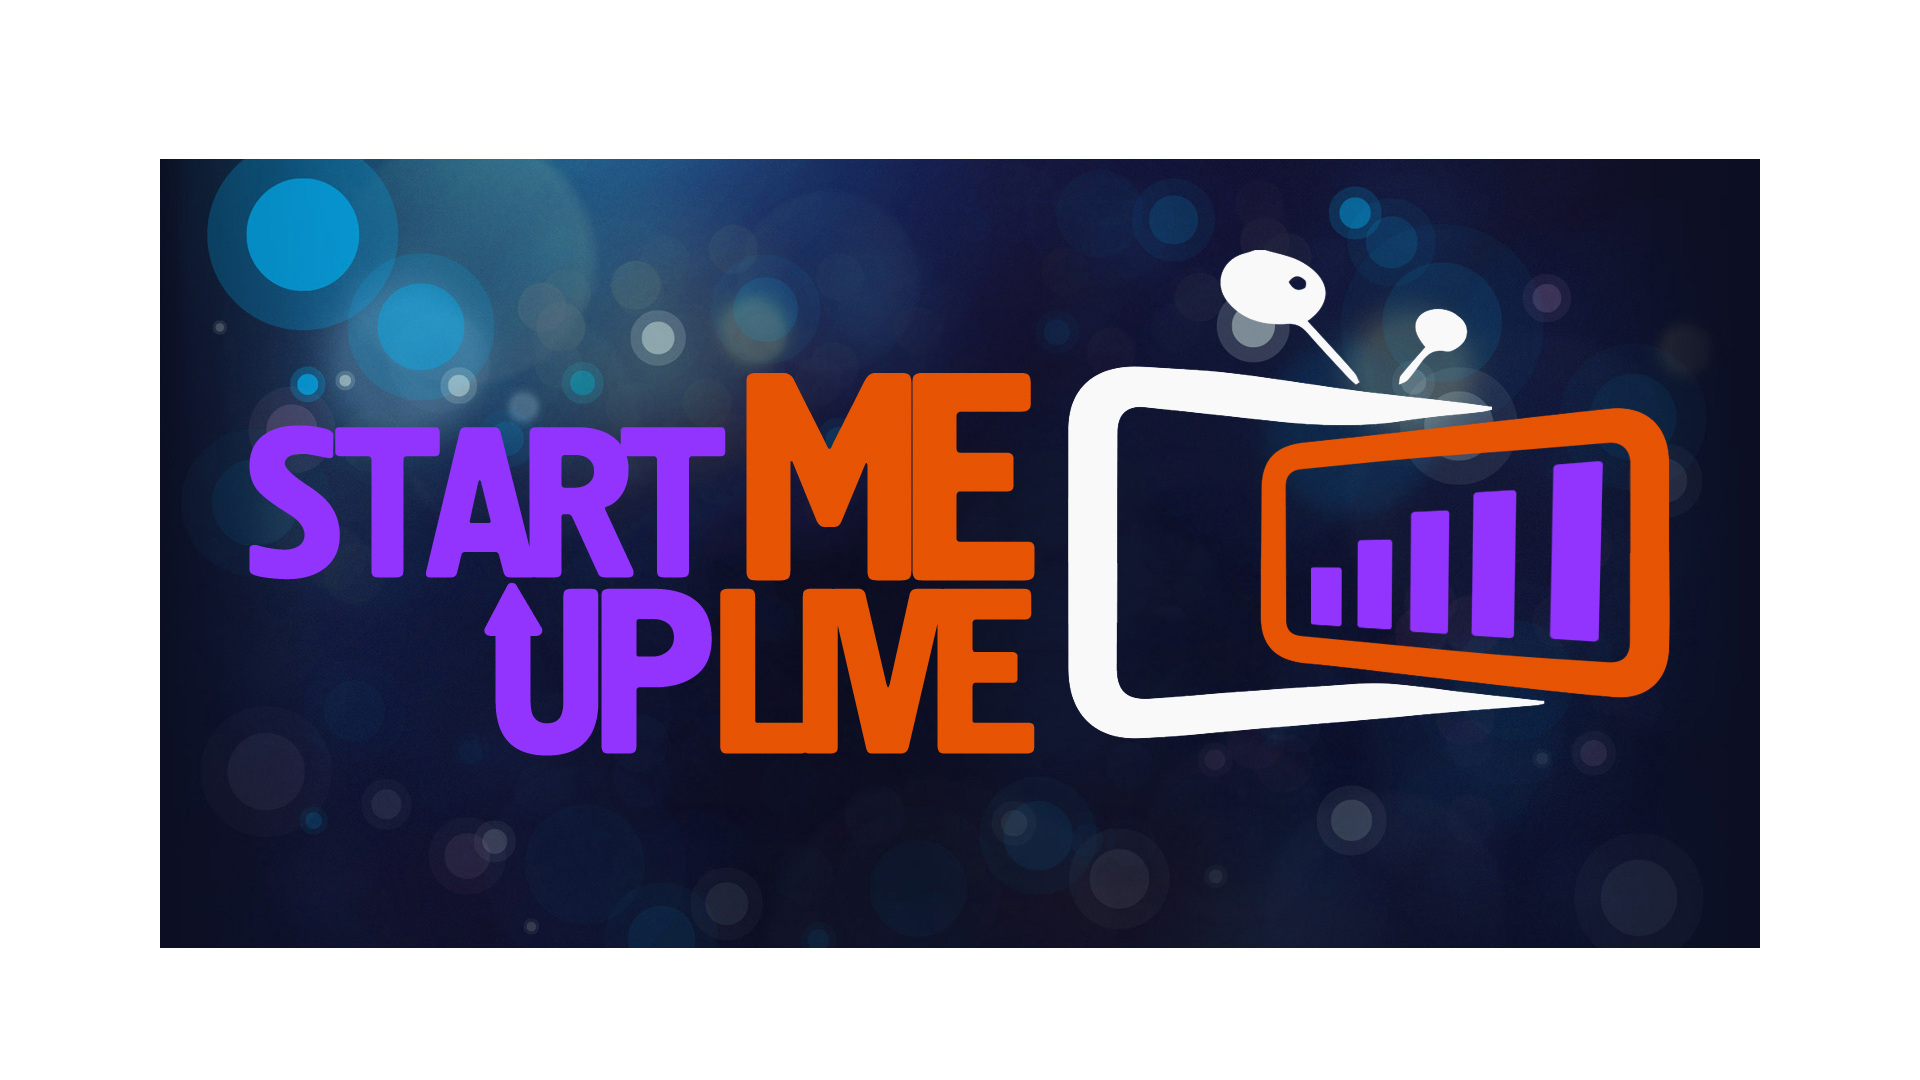 Start Me Up Live- A Show for Entrepreneurs